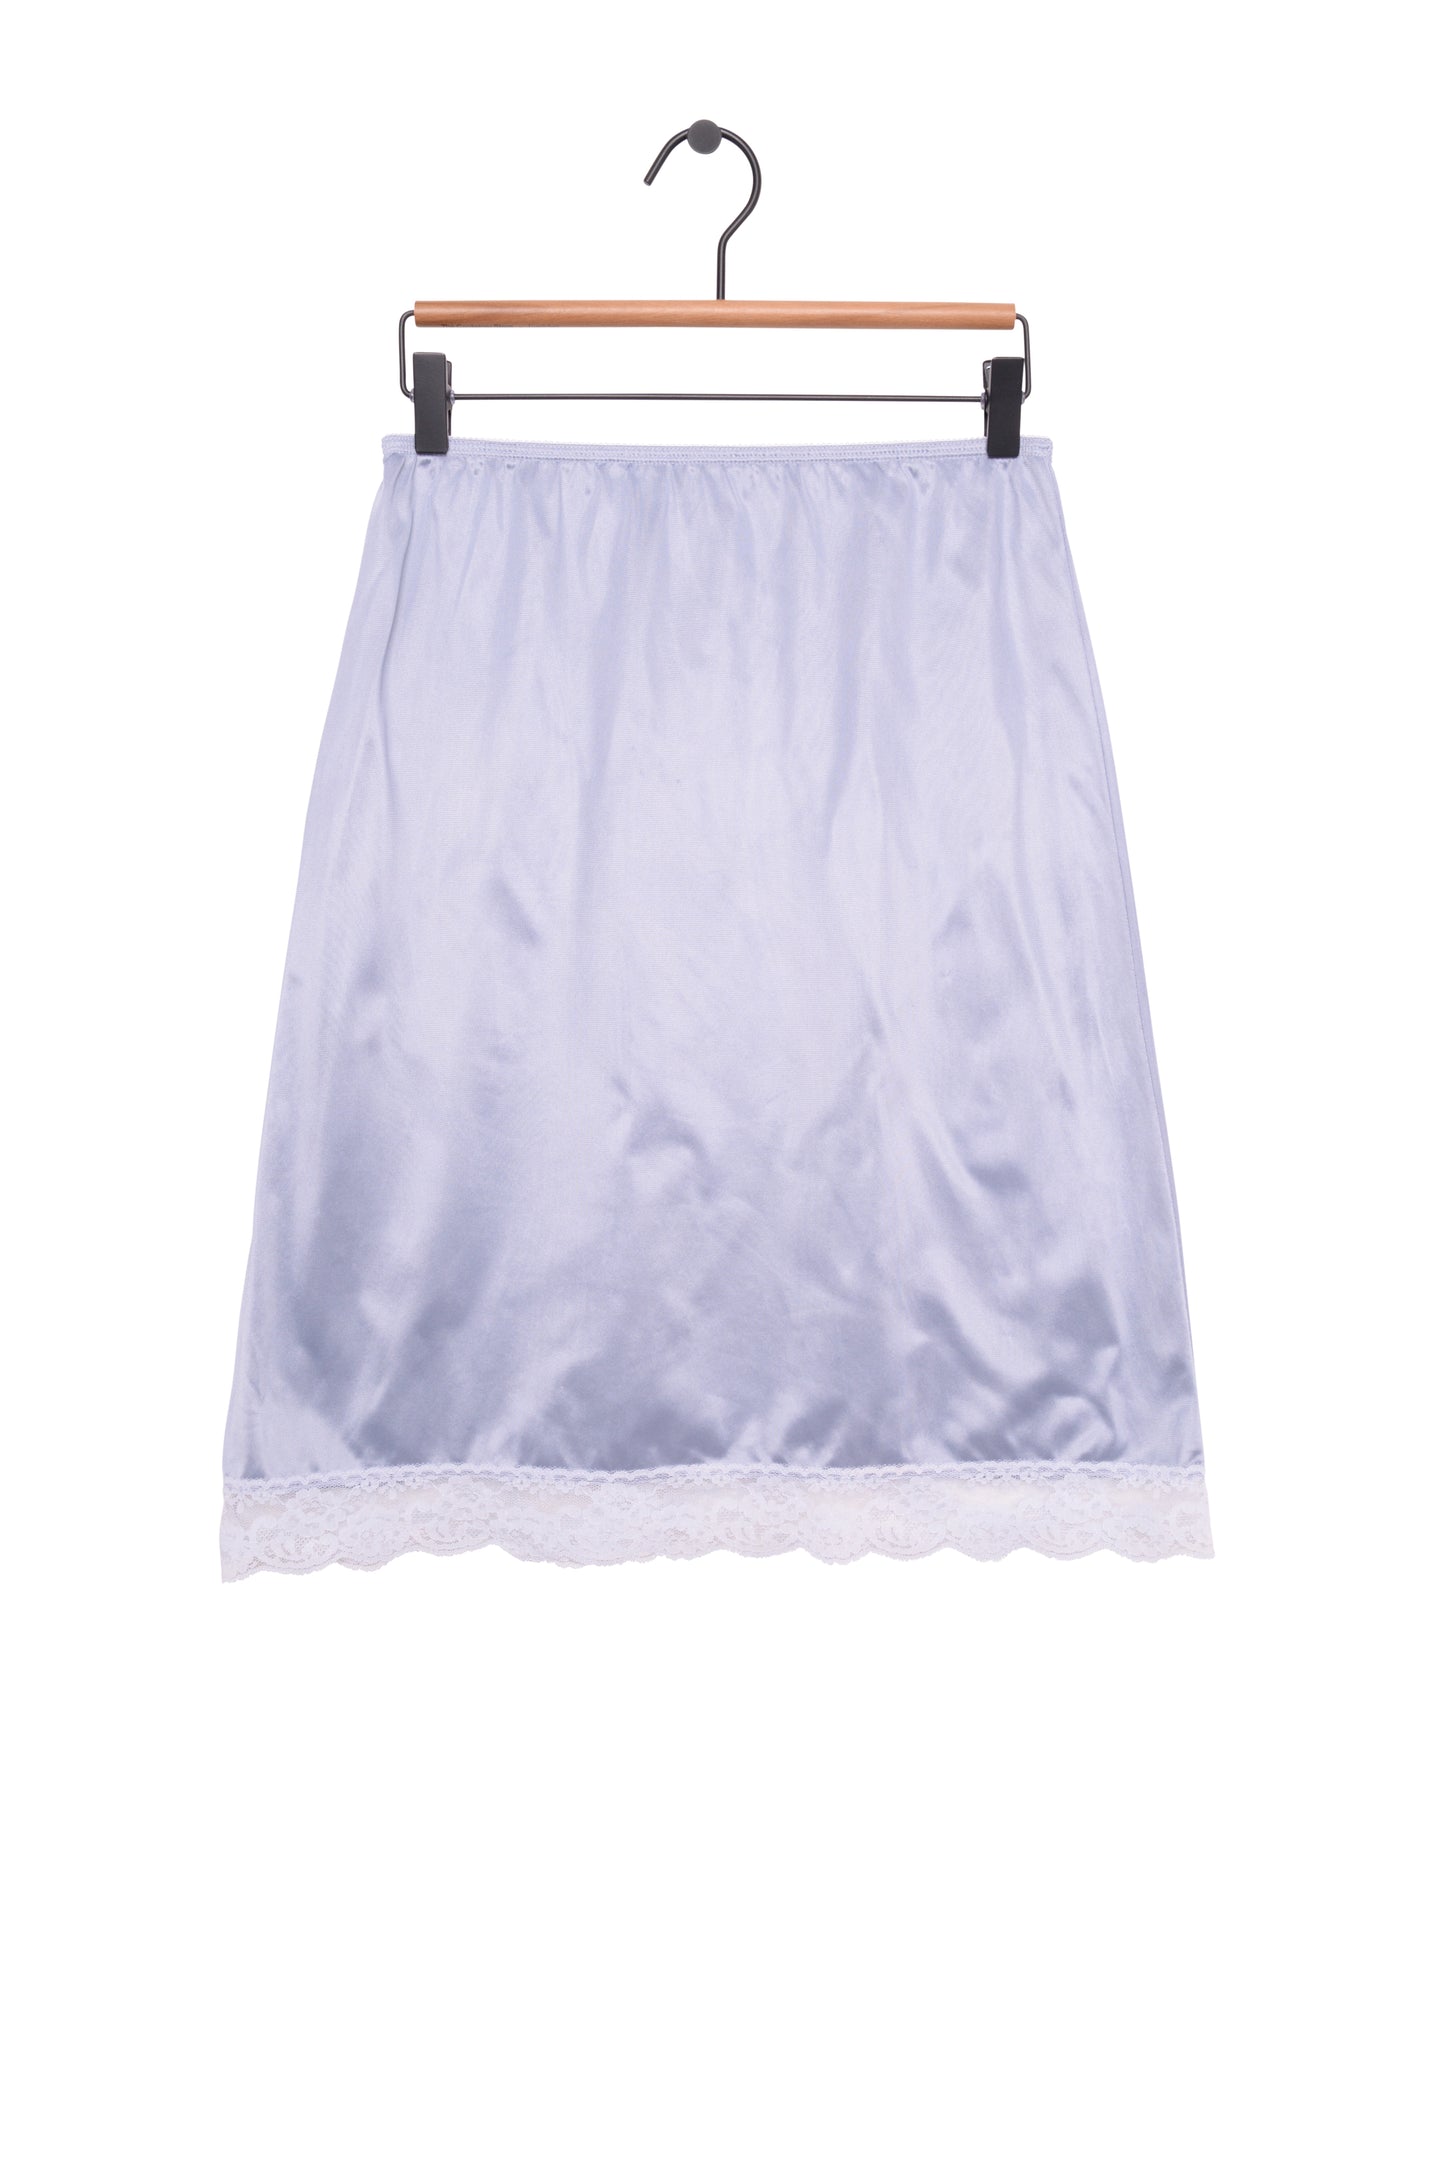 Lace Trim Slip Skirt USA